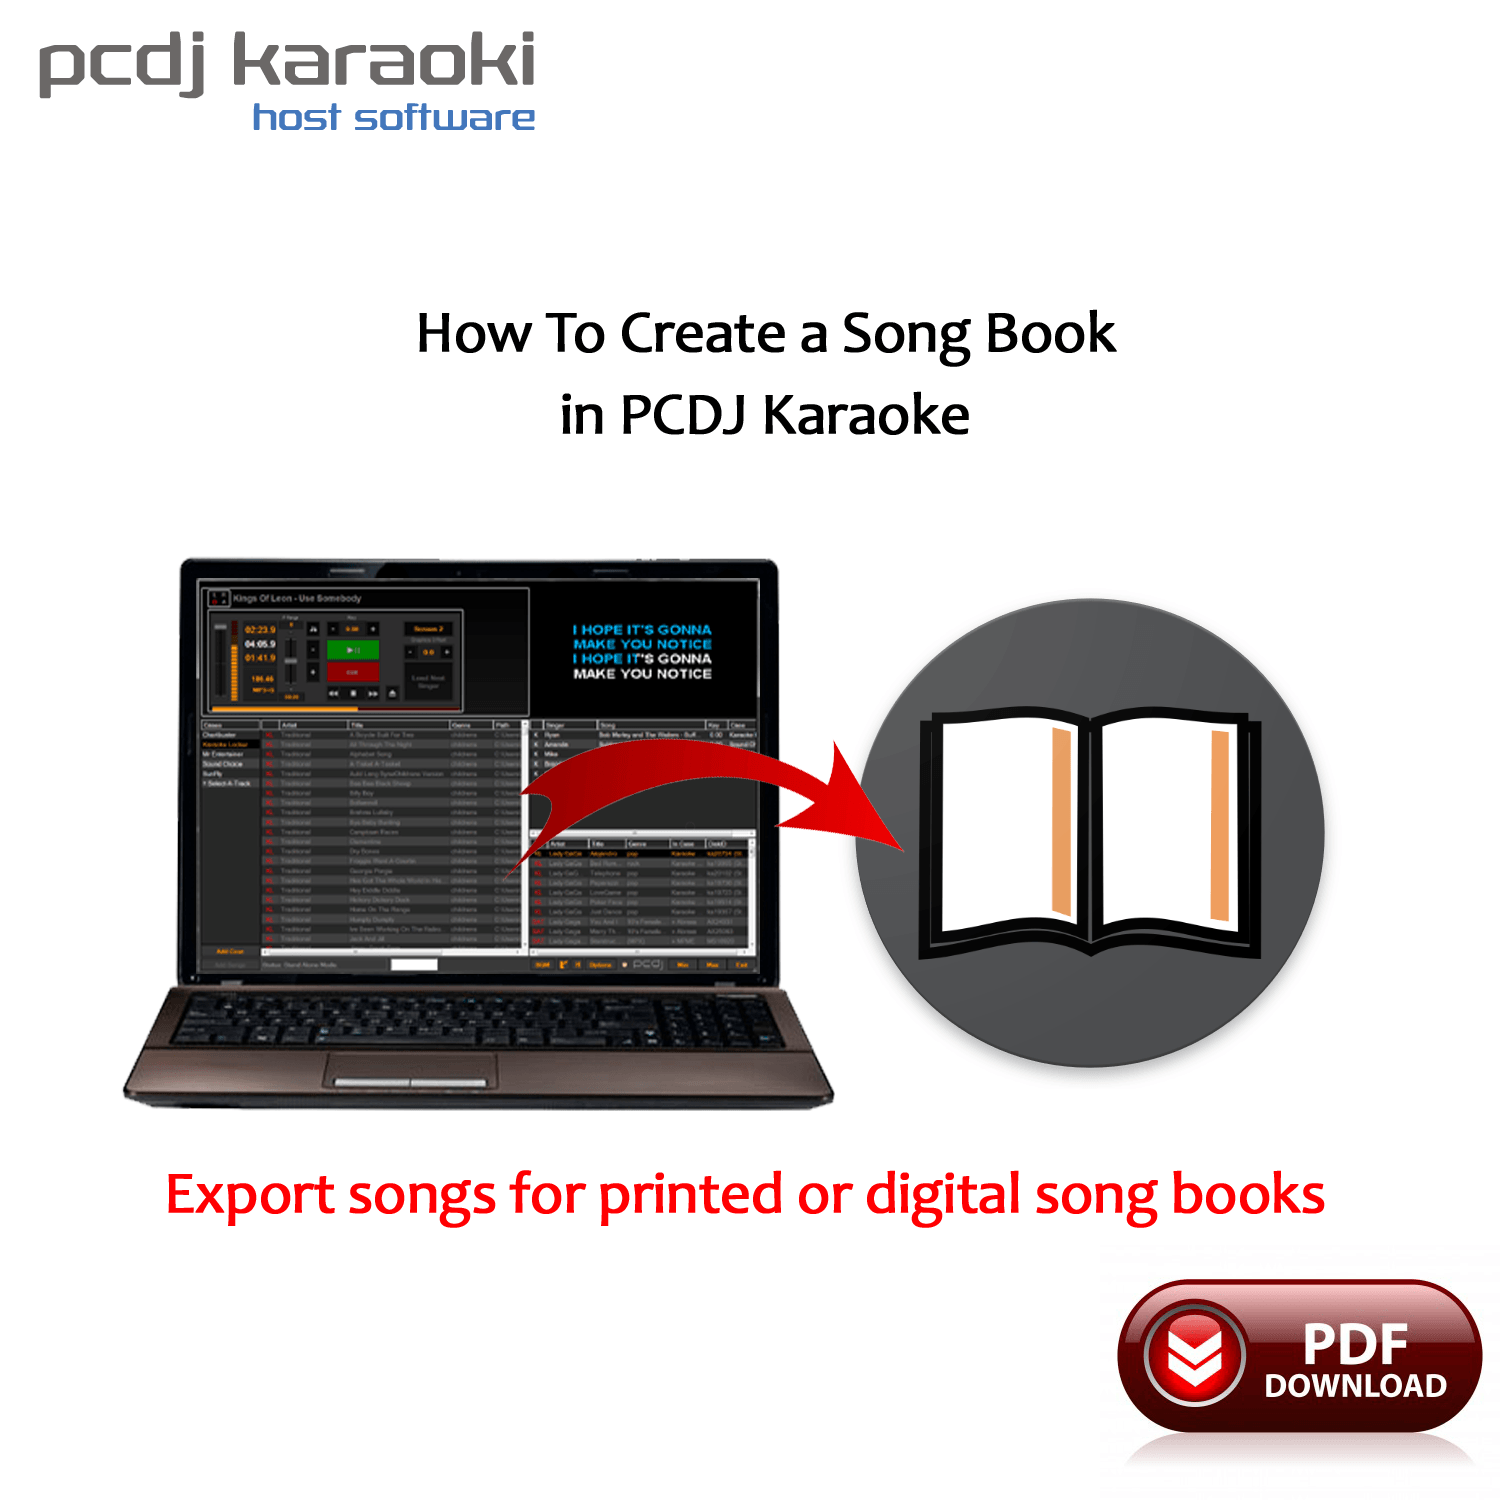 How To Create a Song Book in PCDJ Karaoki (PDF) E-Book - Karaoke Home Entertainment